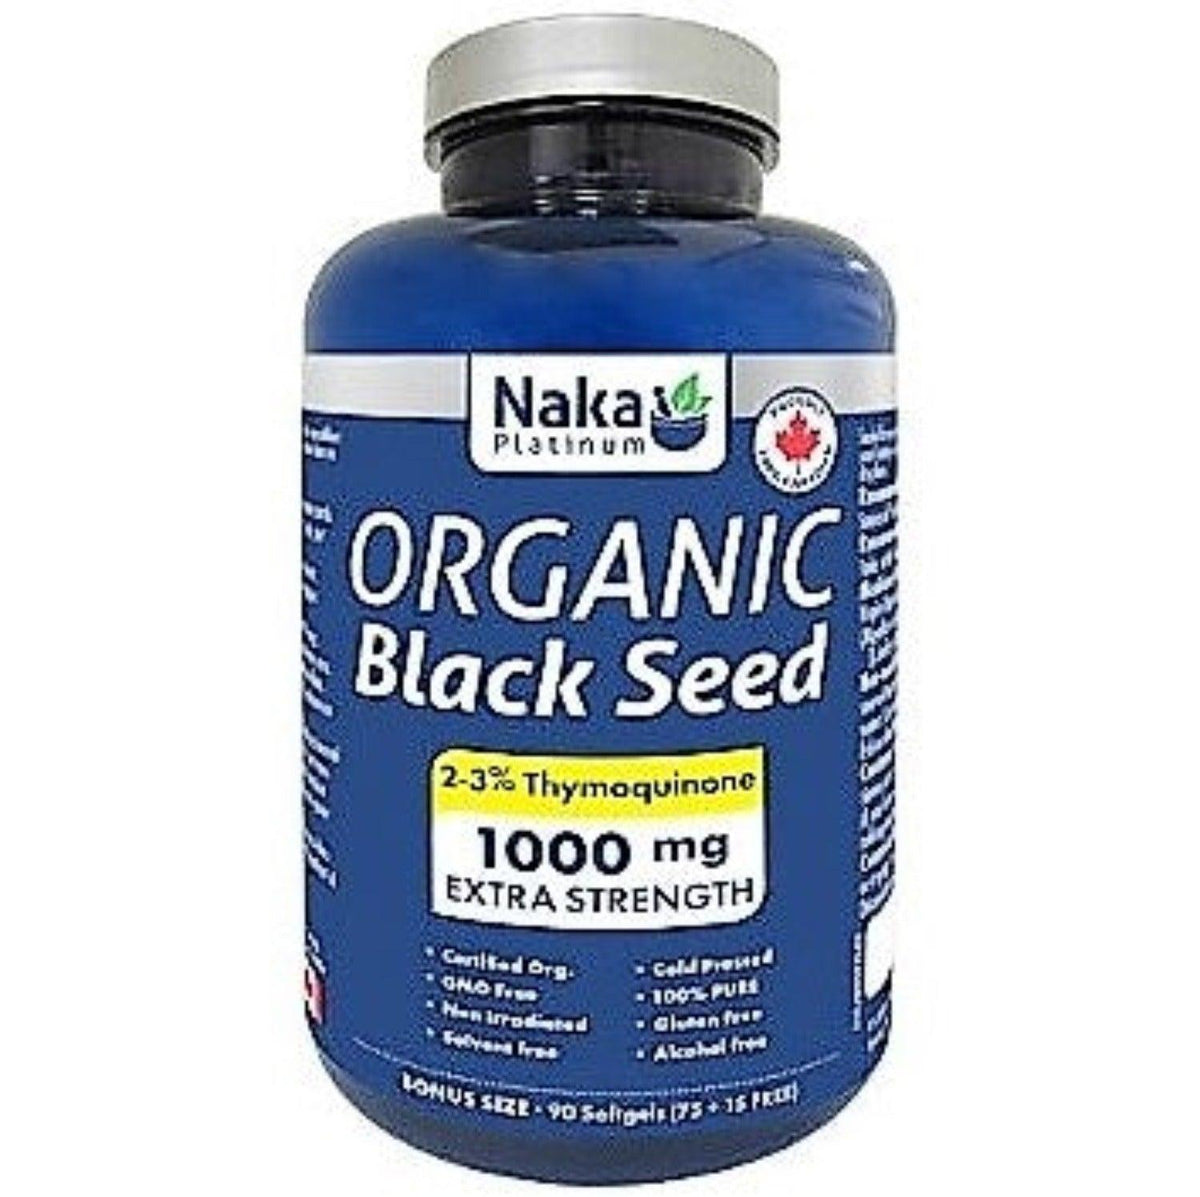 Naka Platinum Organic Black Seed 2-3% Thymoquinone 1000mg Extra Strength 90 Softgels (75 + 15 FREE) Supplements at Village Vitamin Store